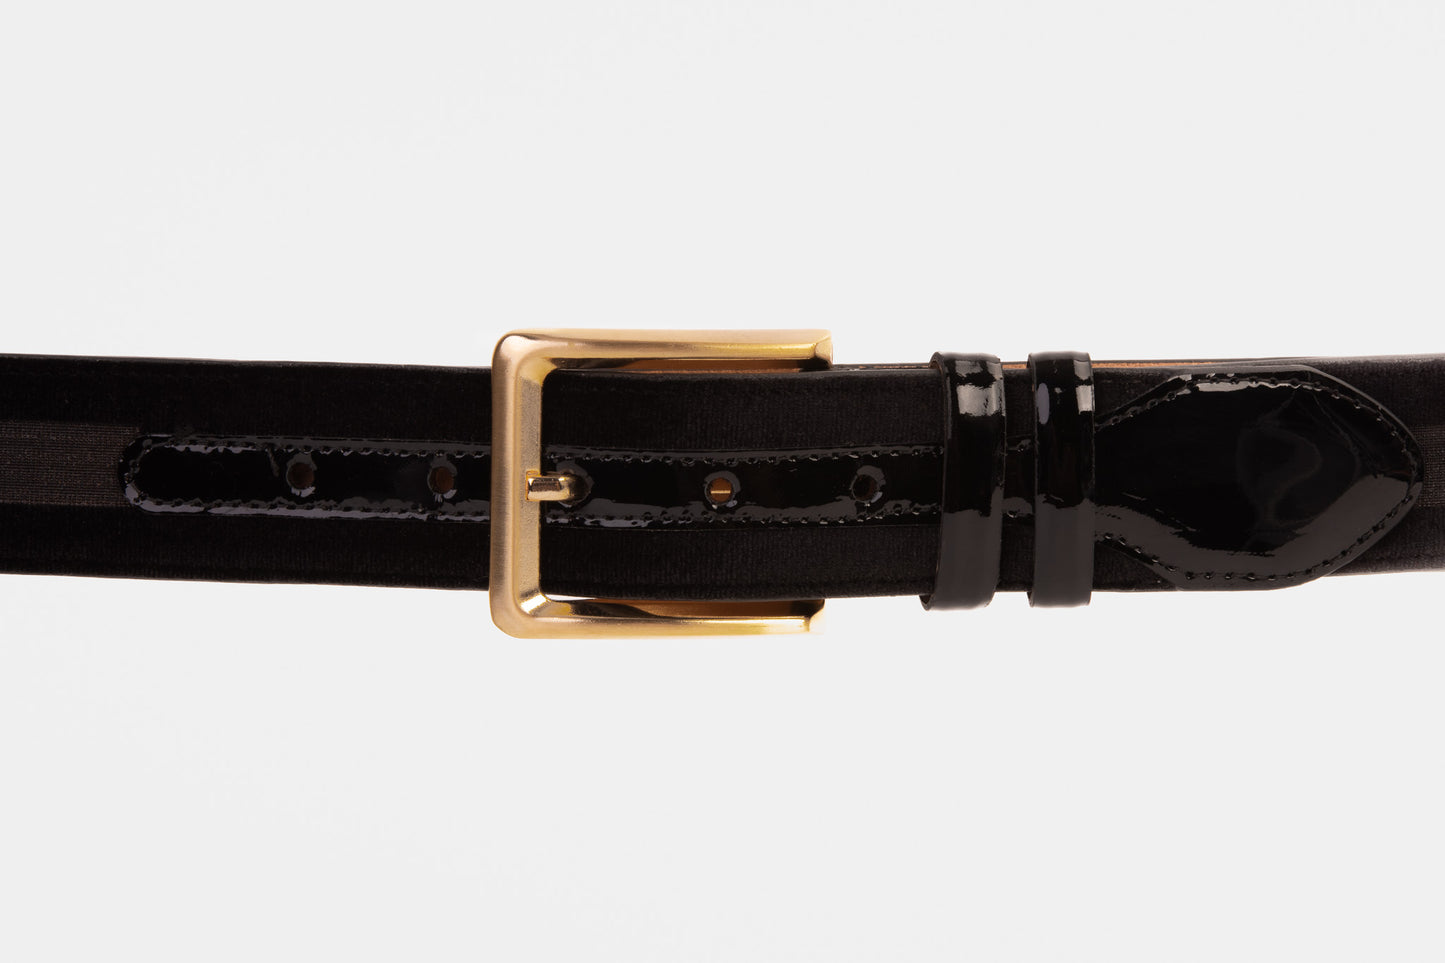 The Pontalto Black Leather Belt